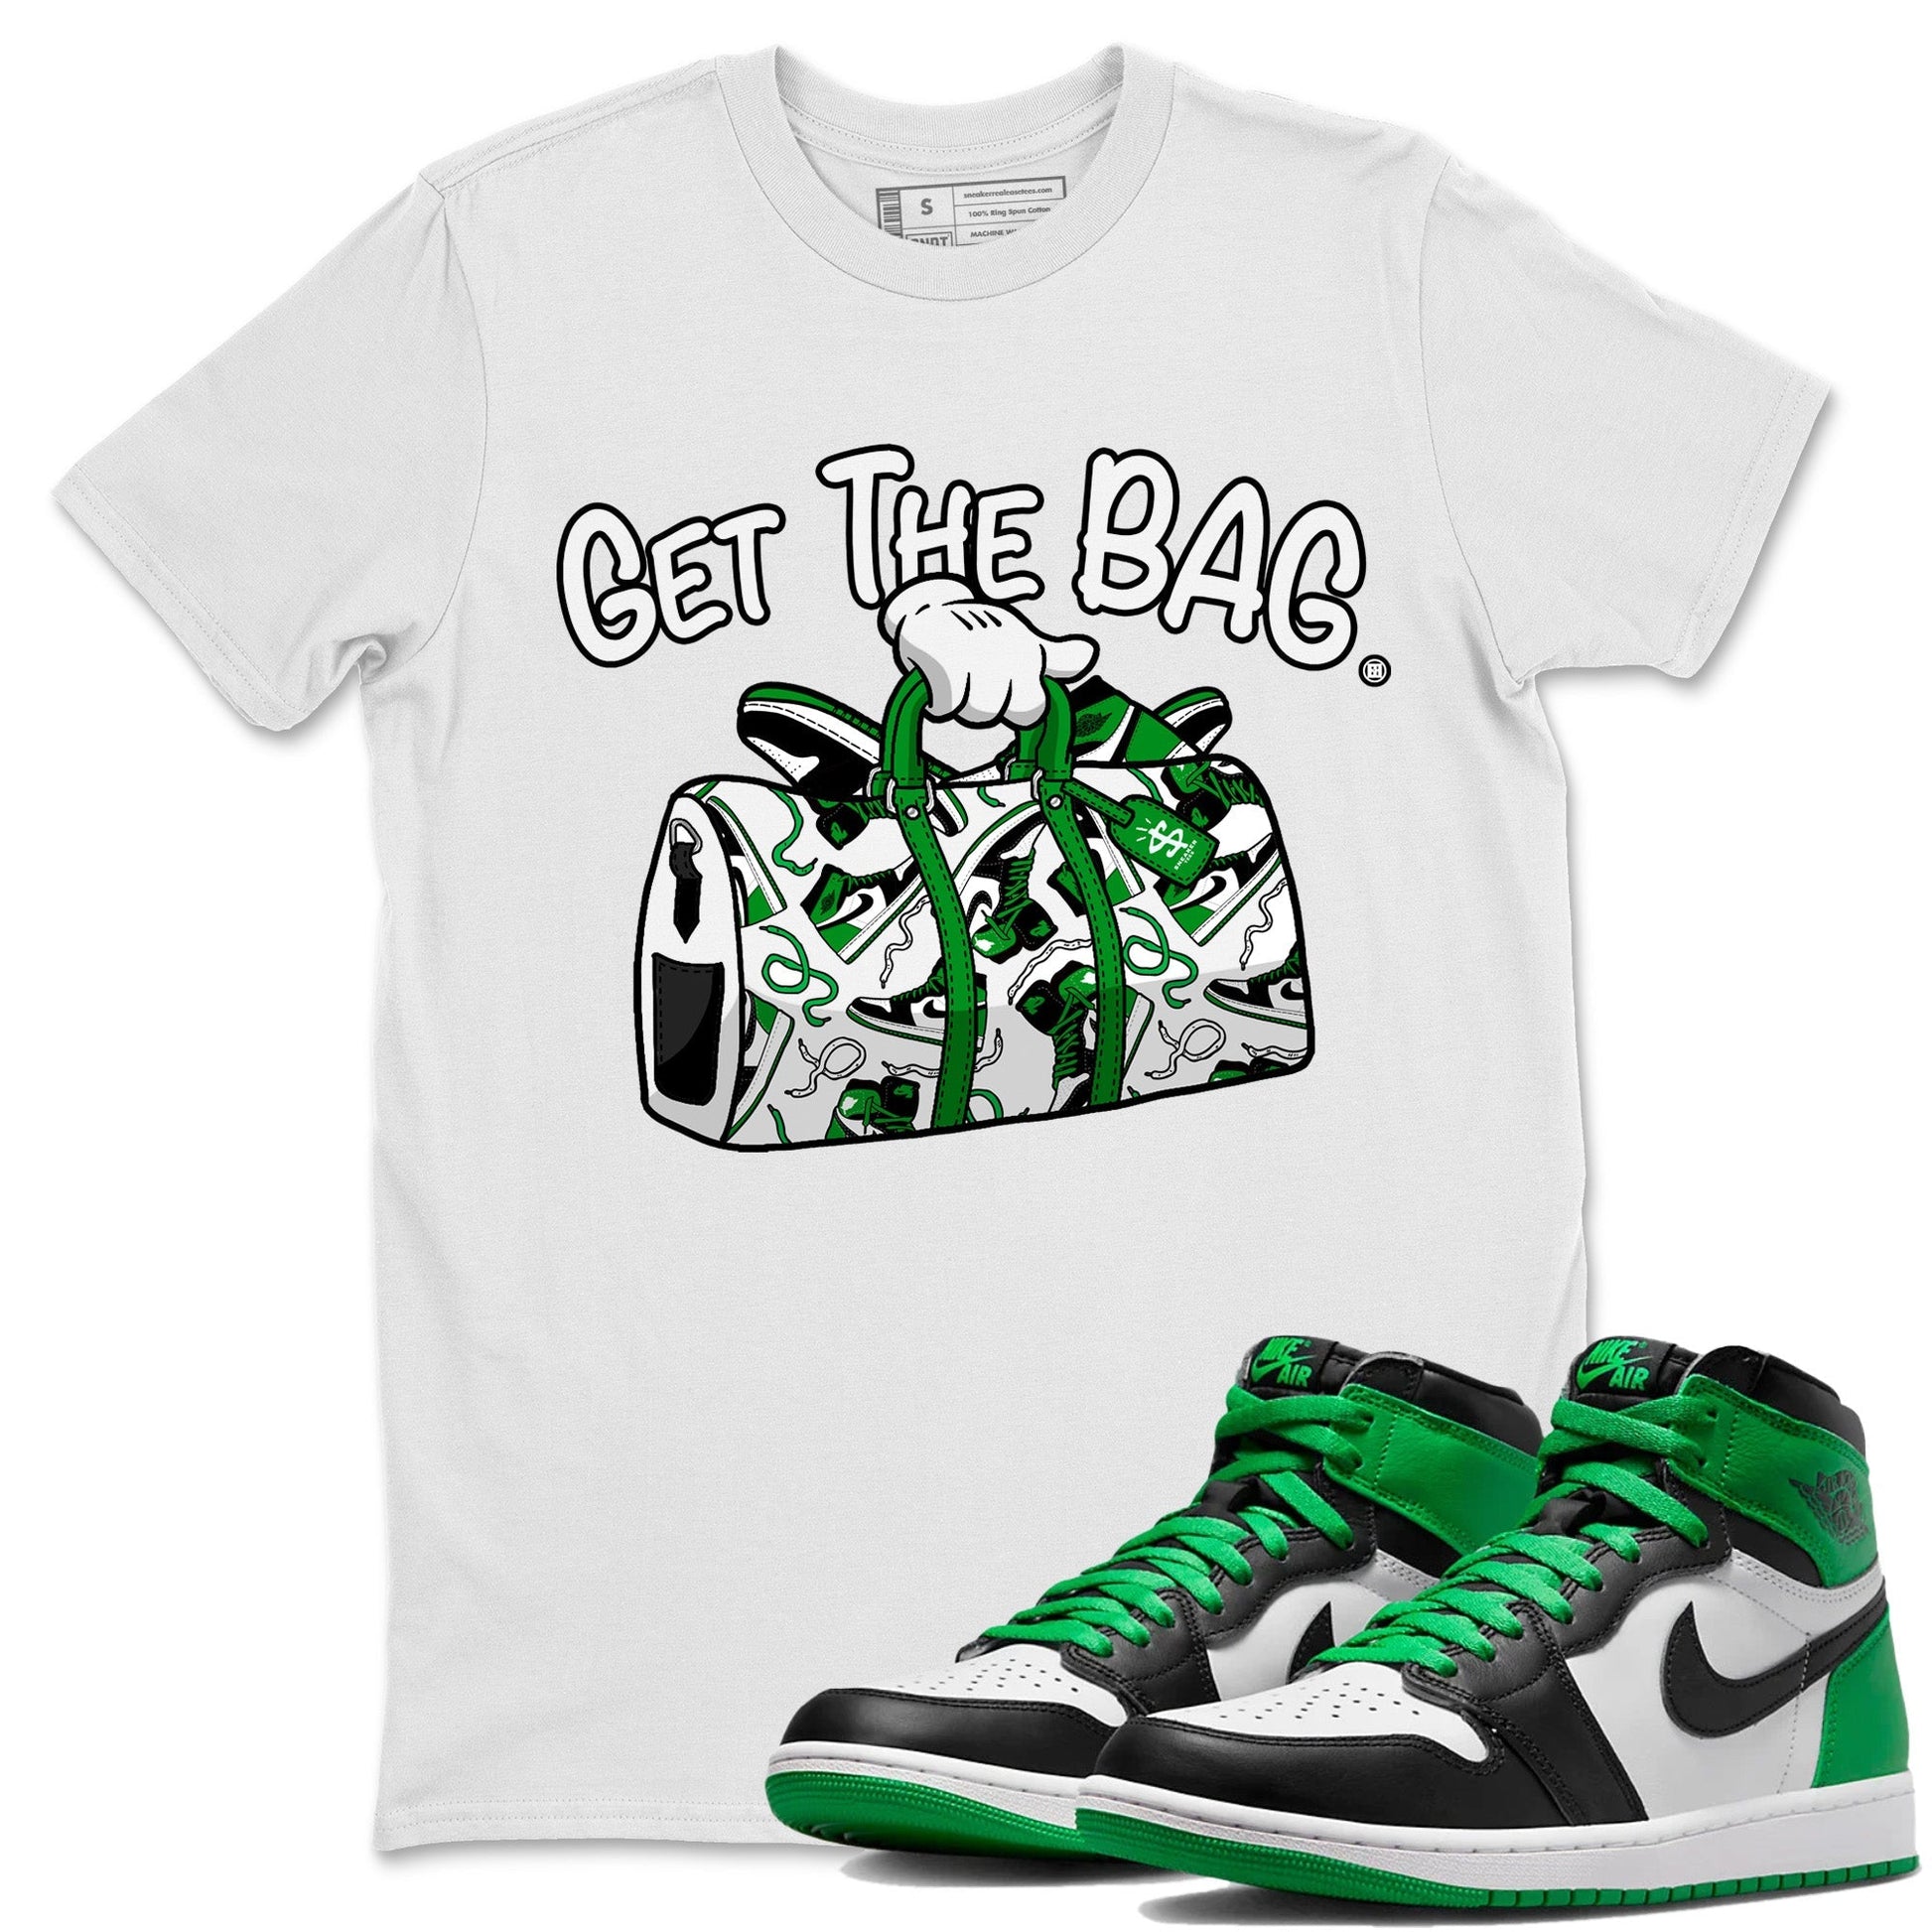 Air Jordan 1 Celtics Shirt To Match Jordans Get The Bag Sneaker Tees Air Jordan 1 Retro Celtics Drip Gear Zone Sneaker Matching Clothing Unisex Shirts White 1